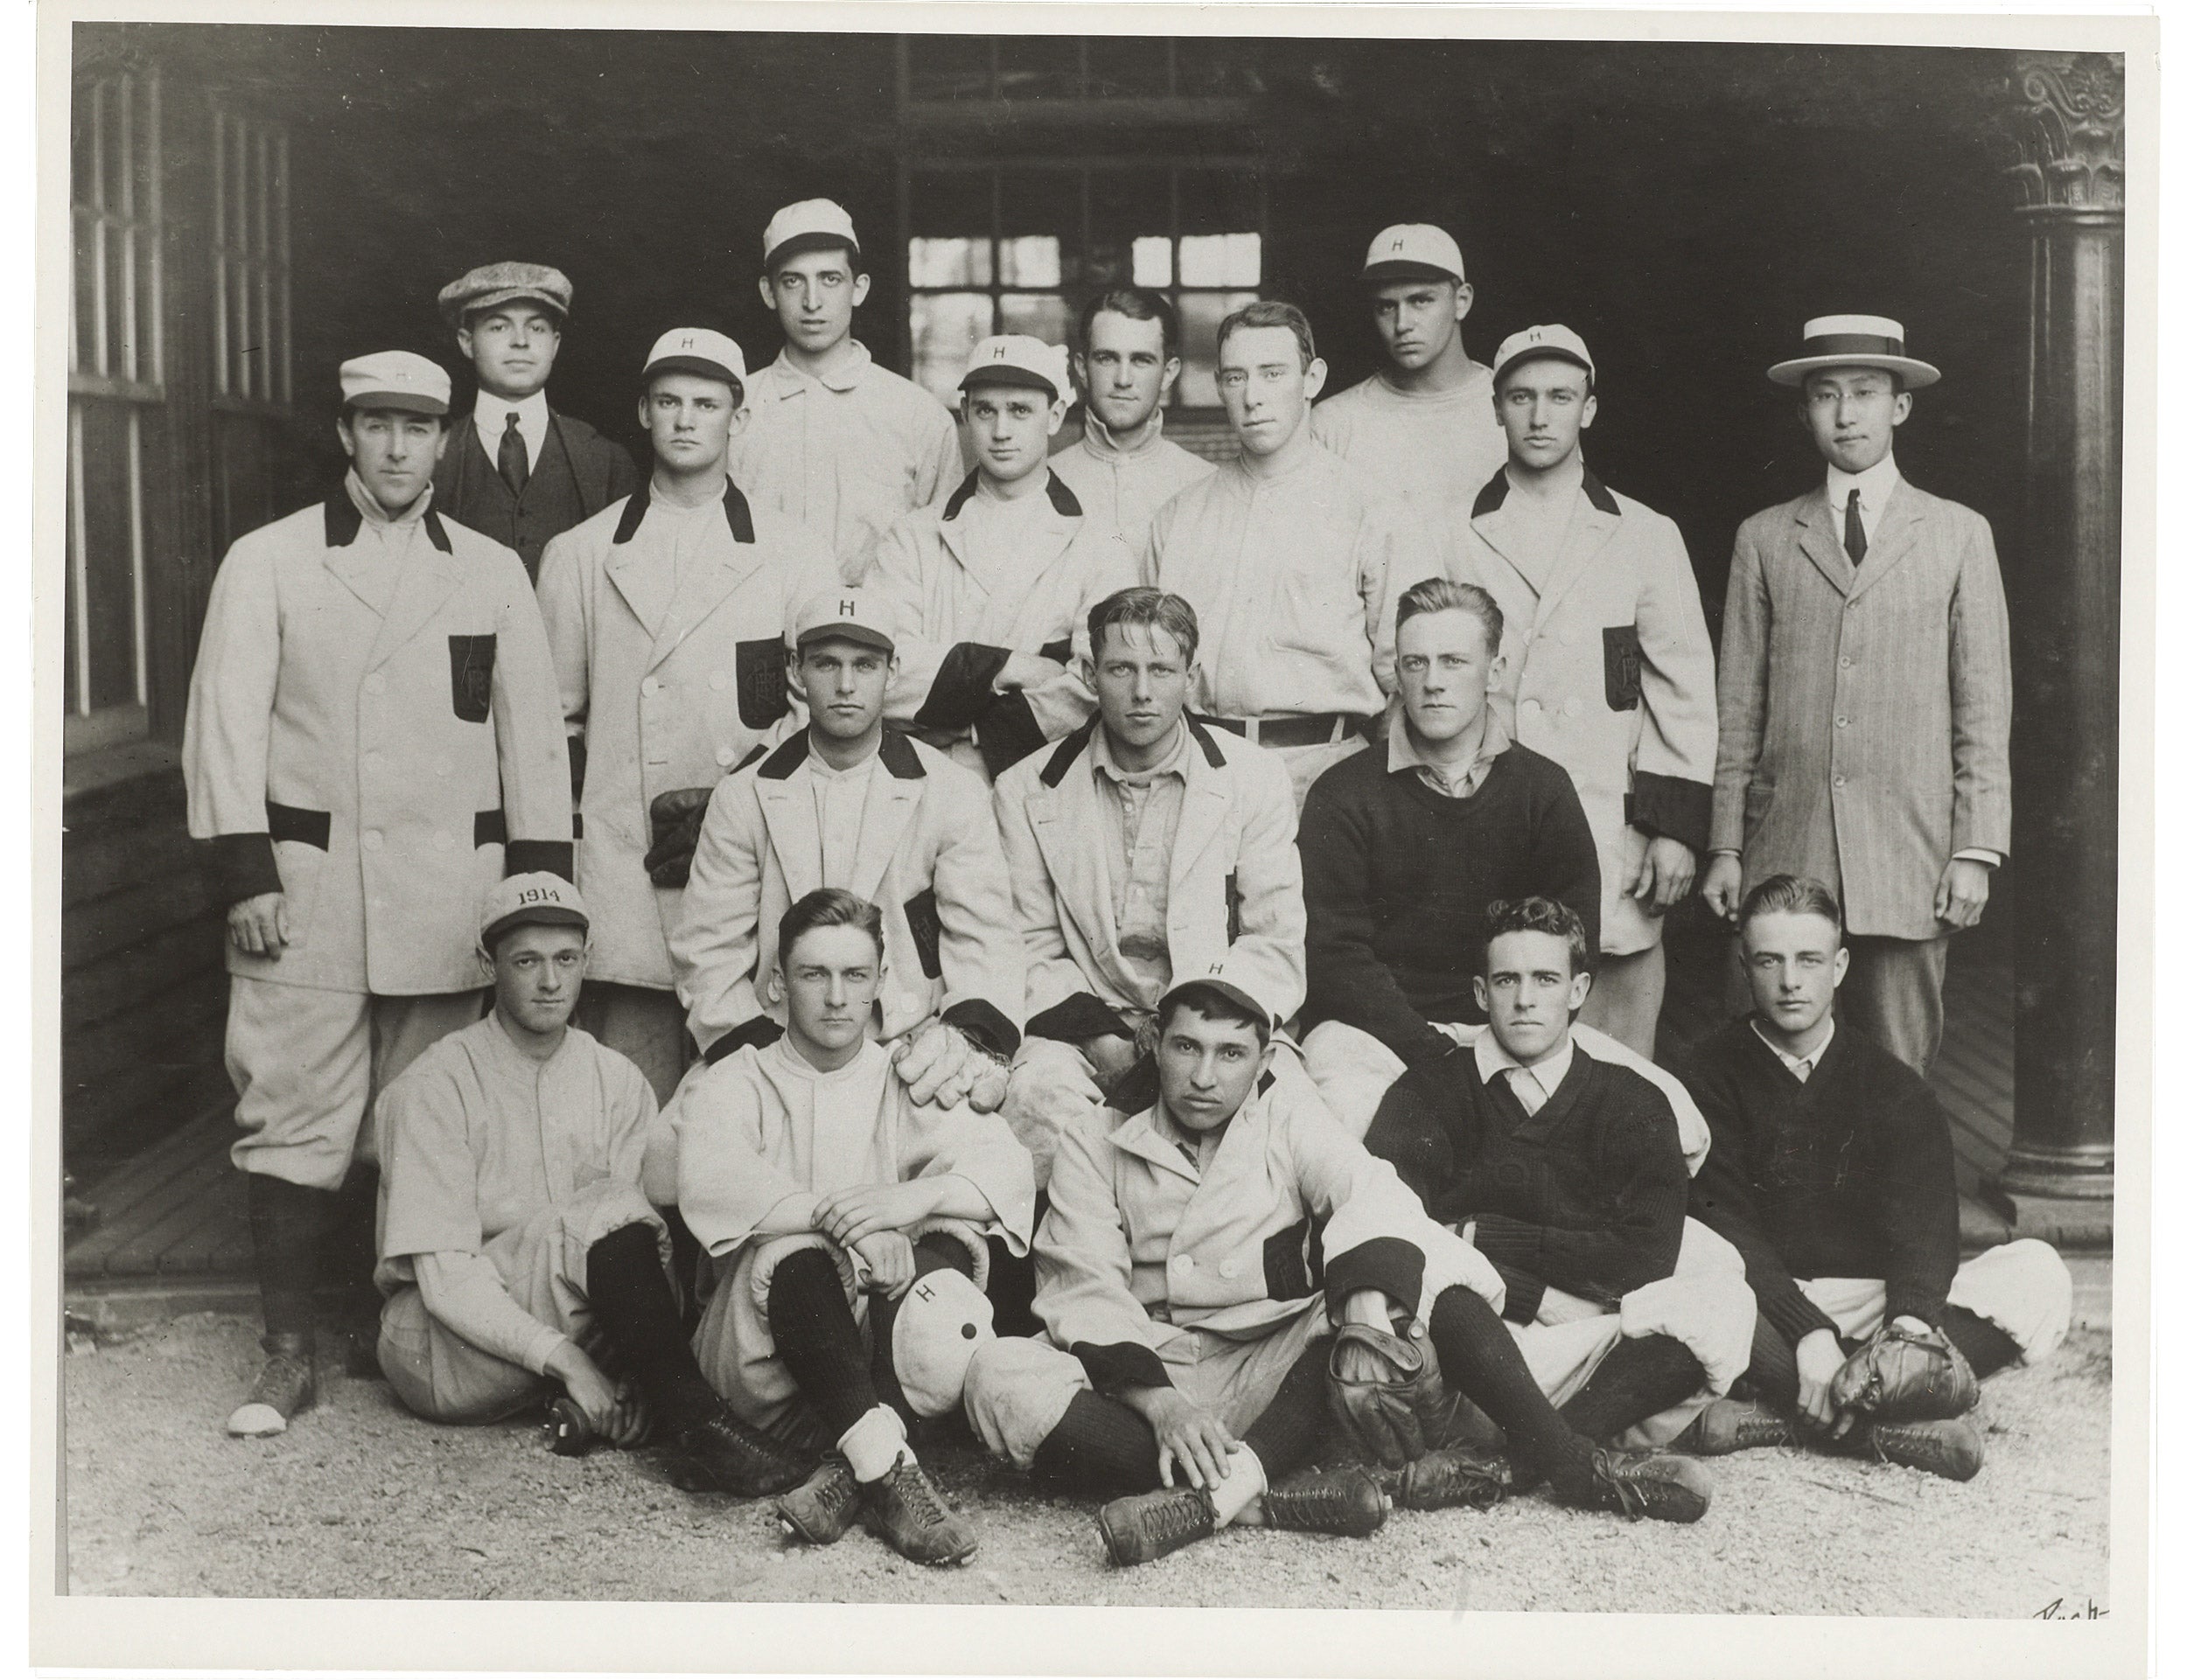 Harvard baseball 1912 team photo.